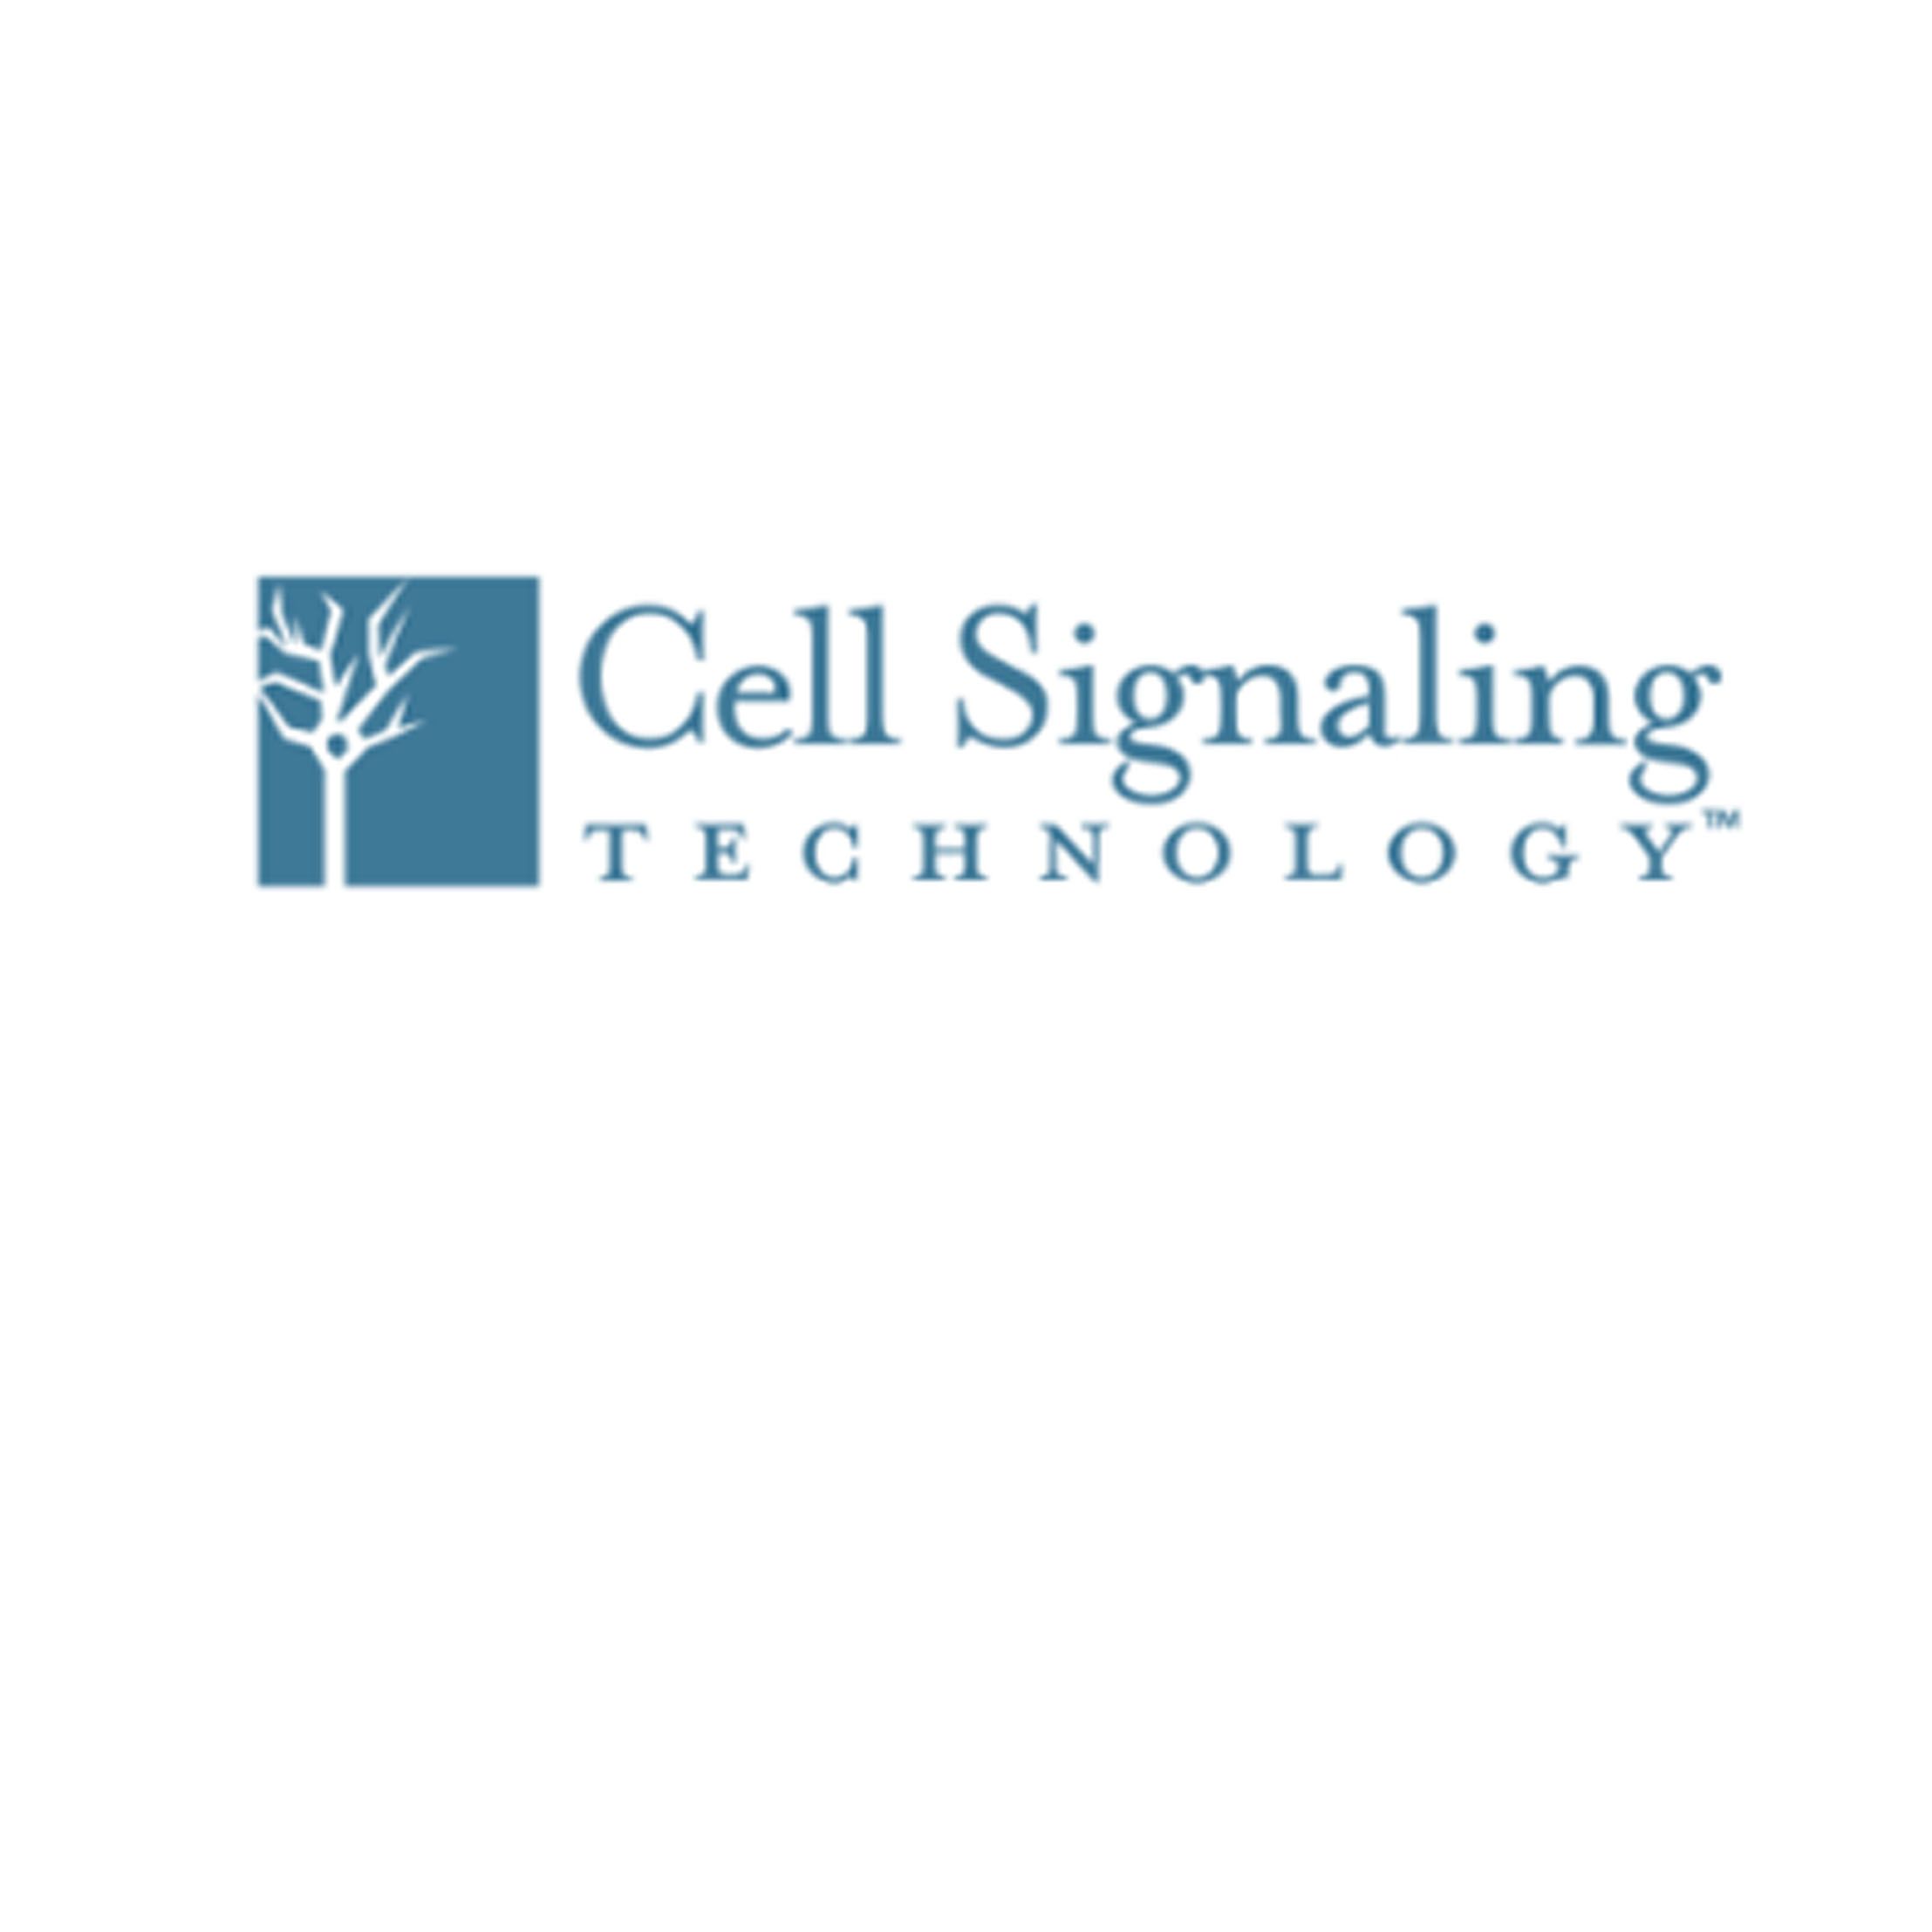 Cell Signaling抗体及磷酸化抗体、ELISA试剂盒、激酶